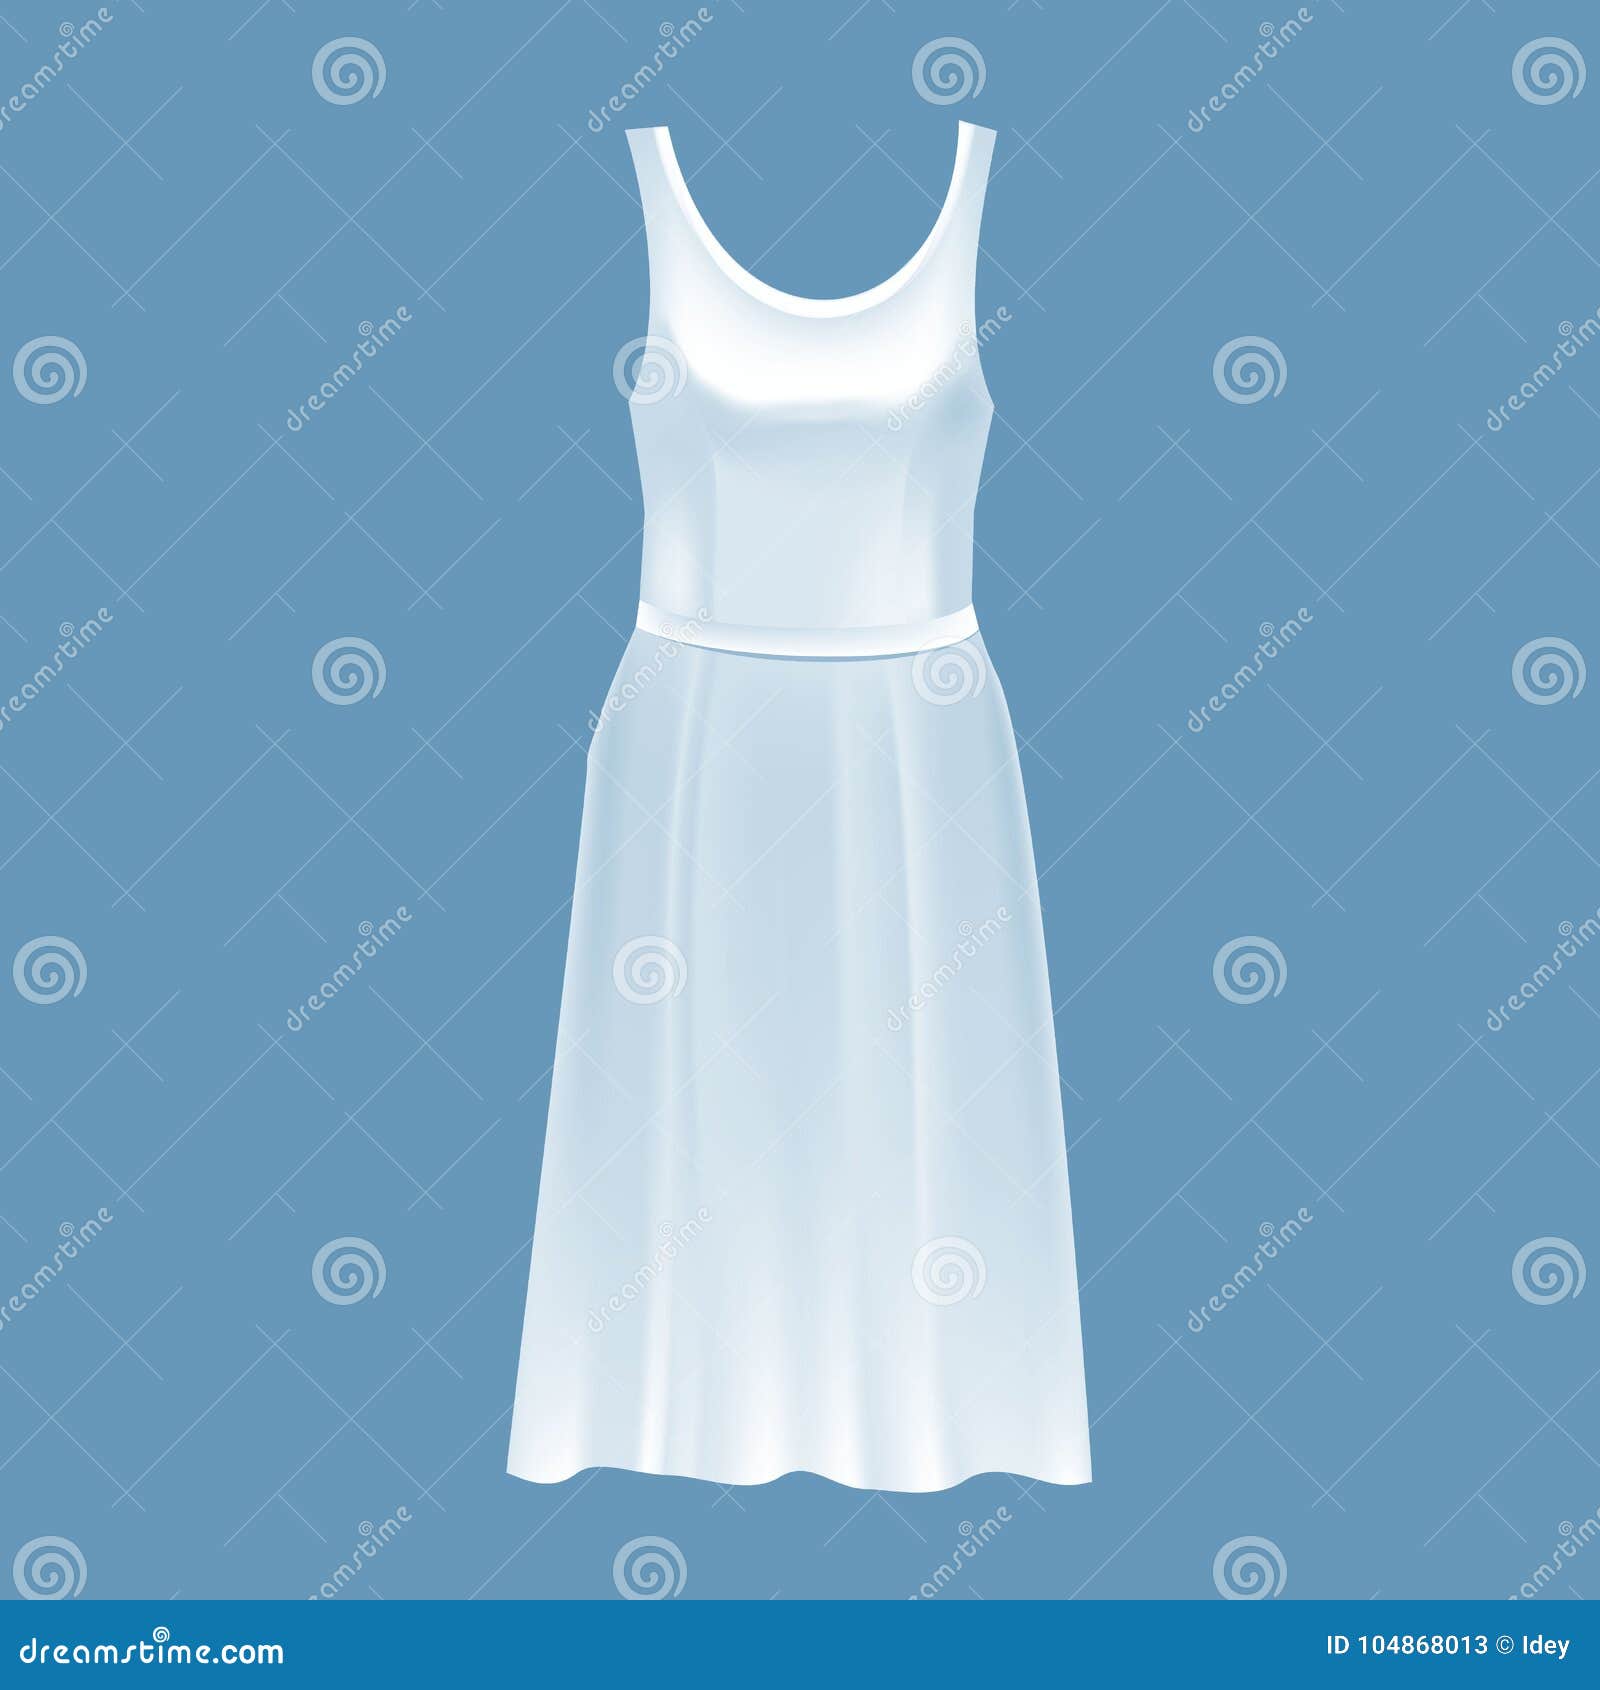 Download Mockup Of Women S Clothes - Beautiful Short Dress. Women`s ...